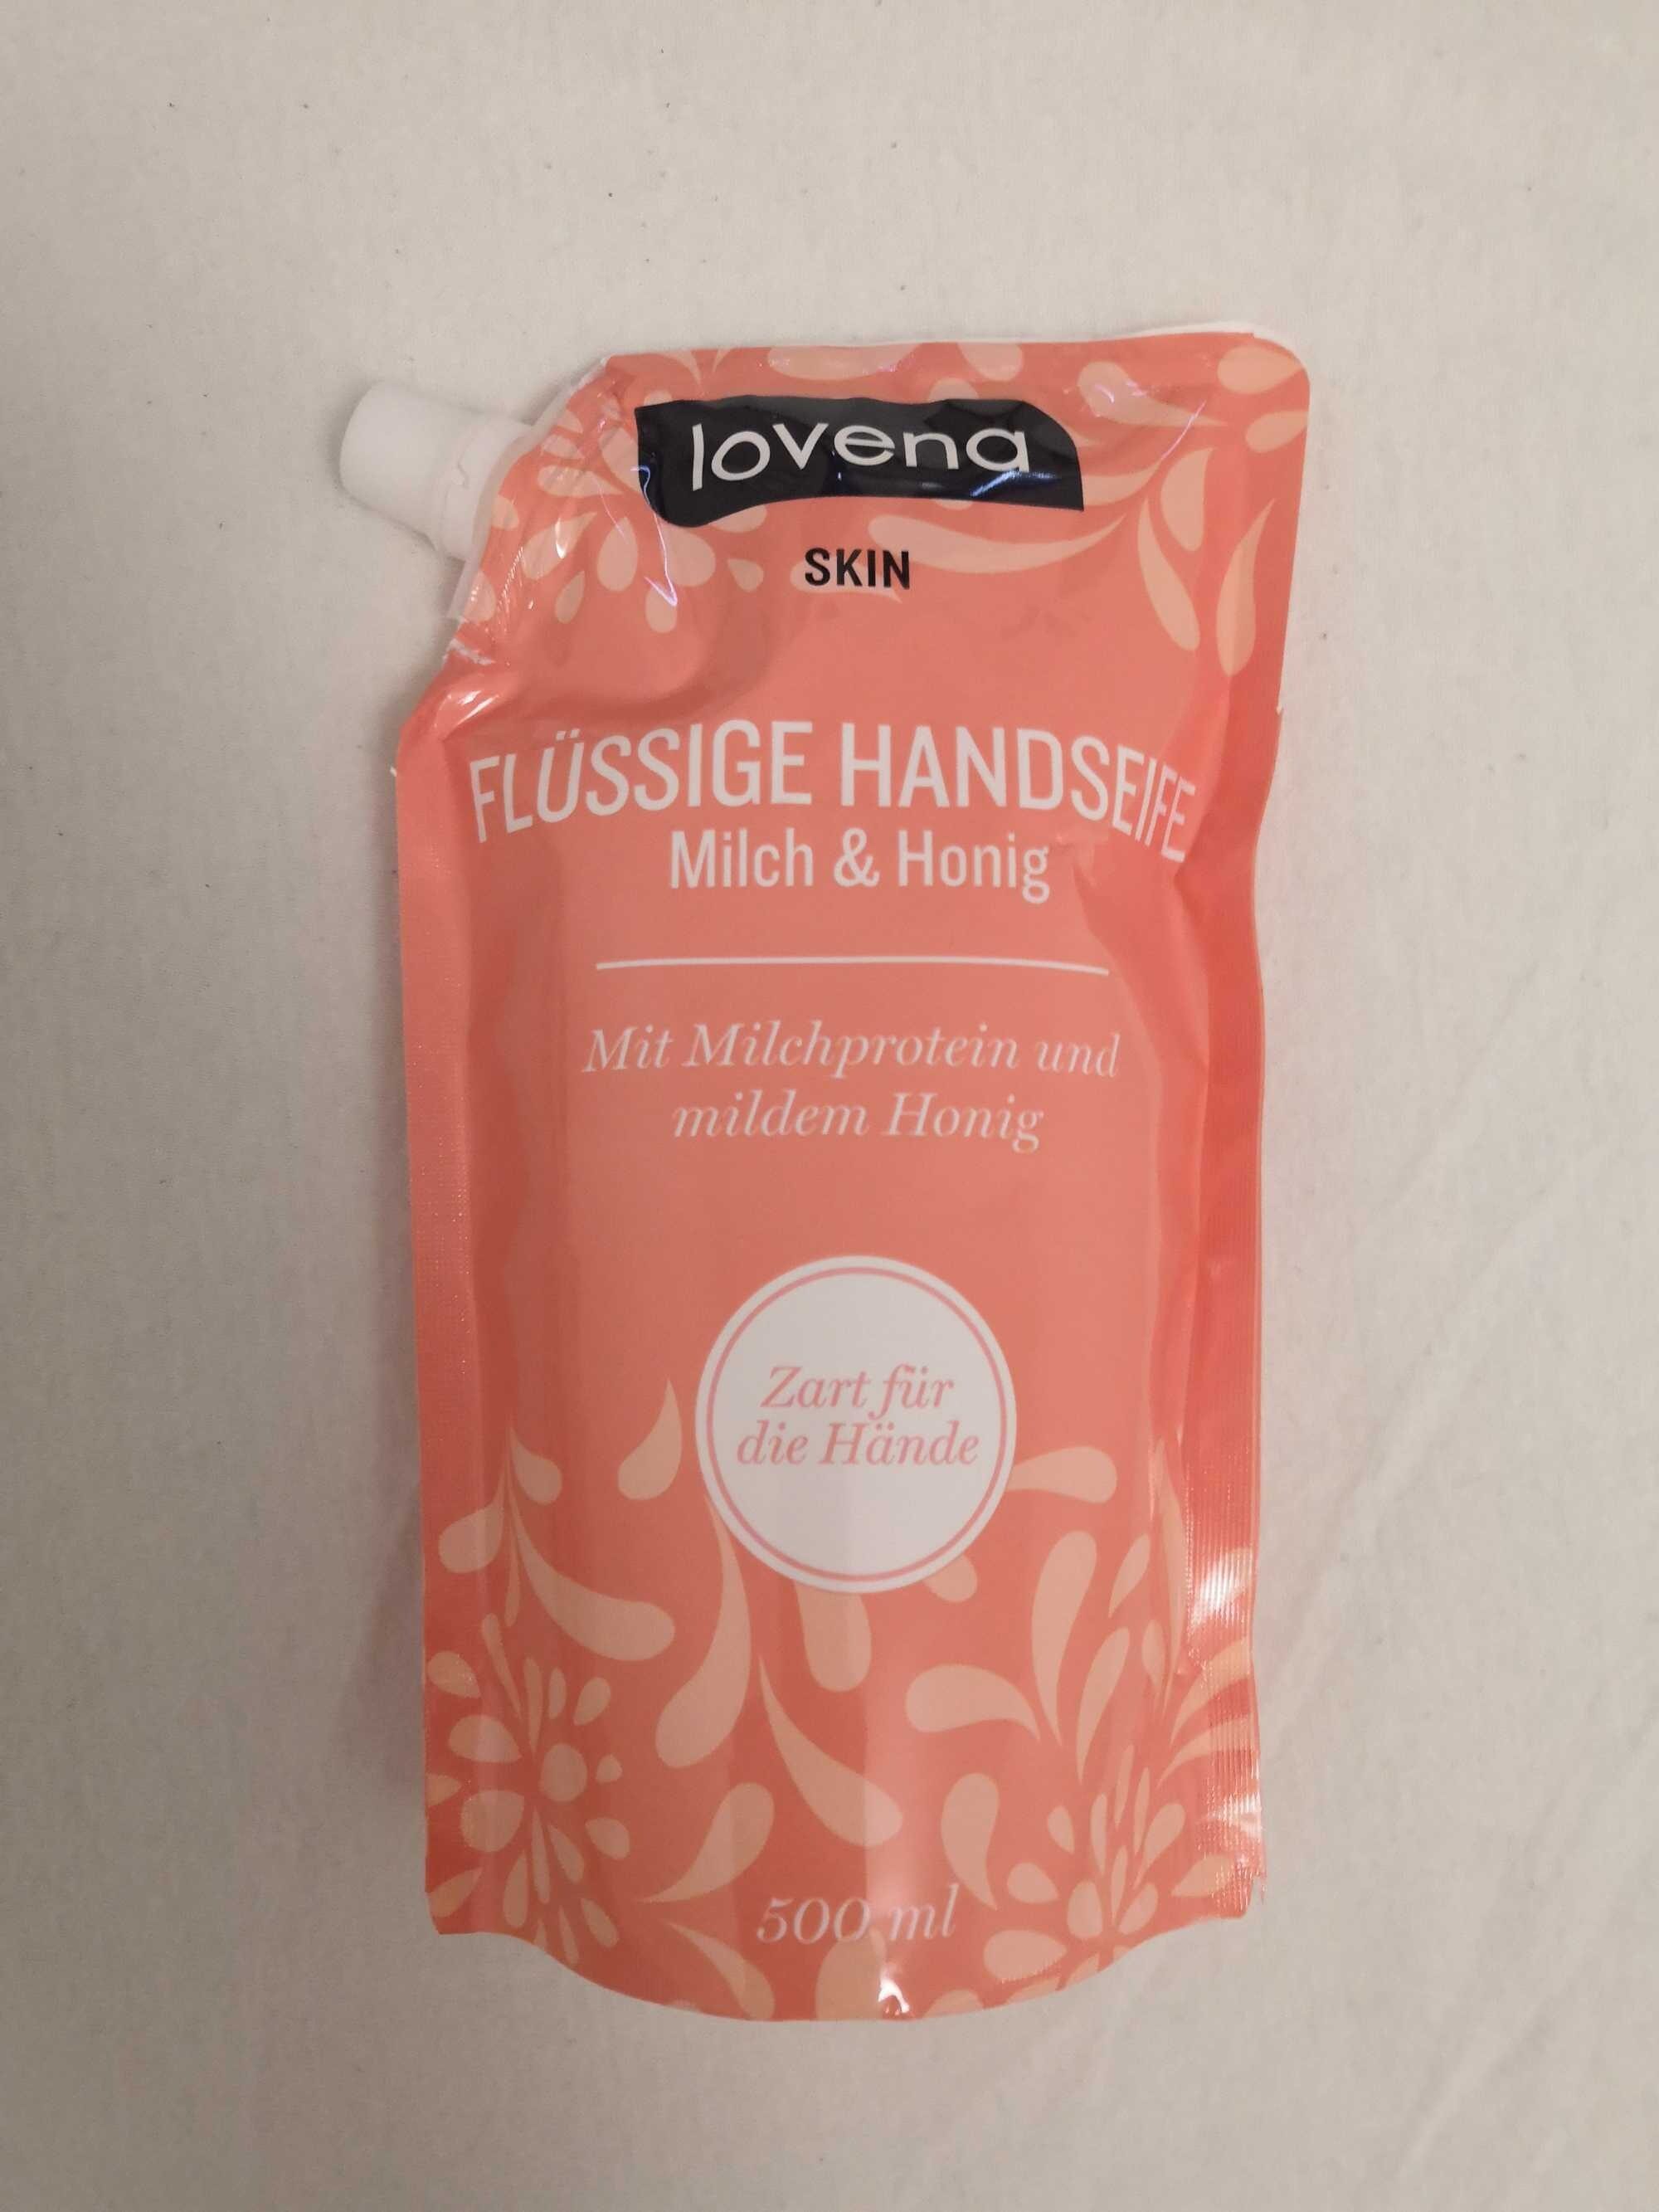 lovena Skin Flüssige Handseife Milch & Honig - Продукт - de